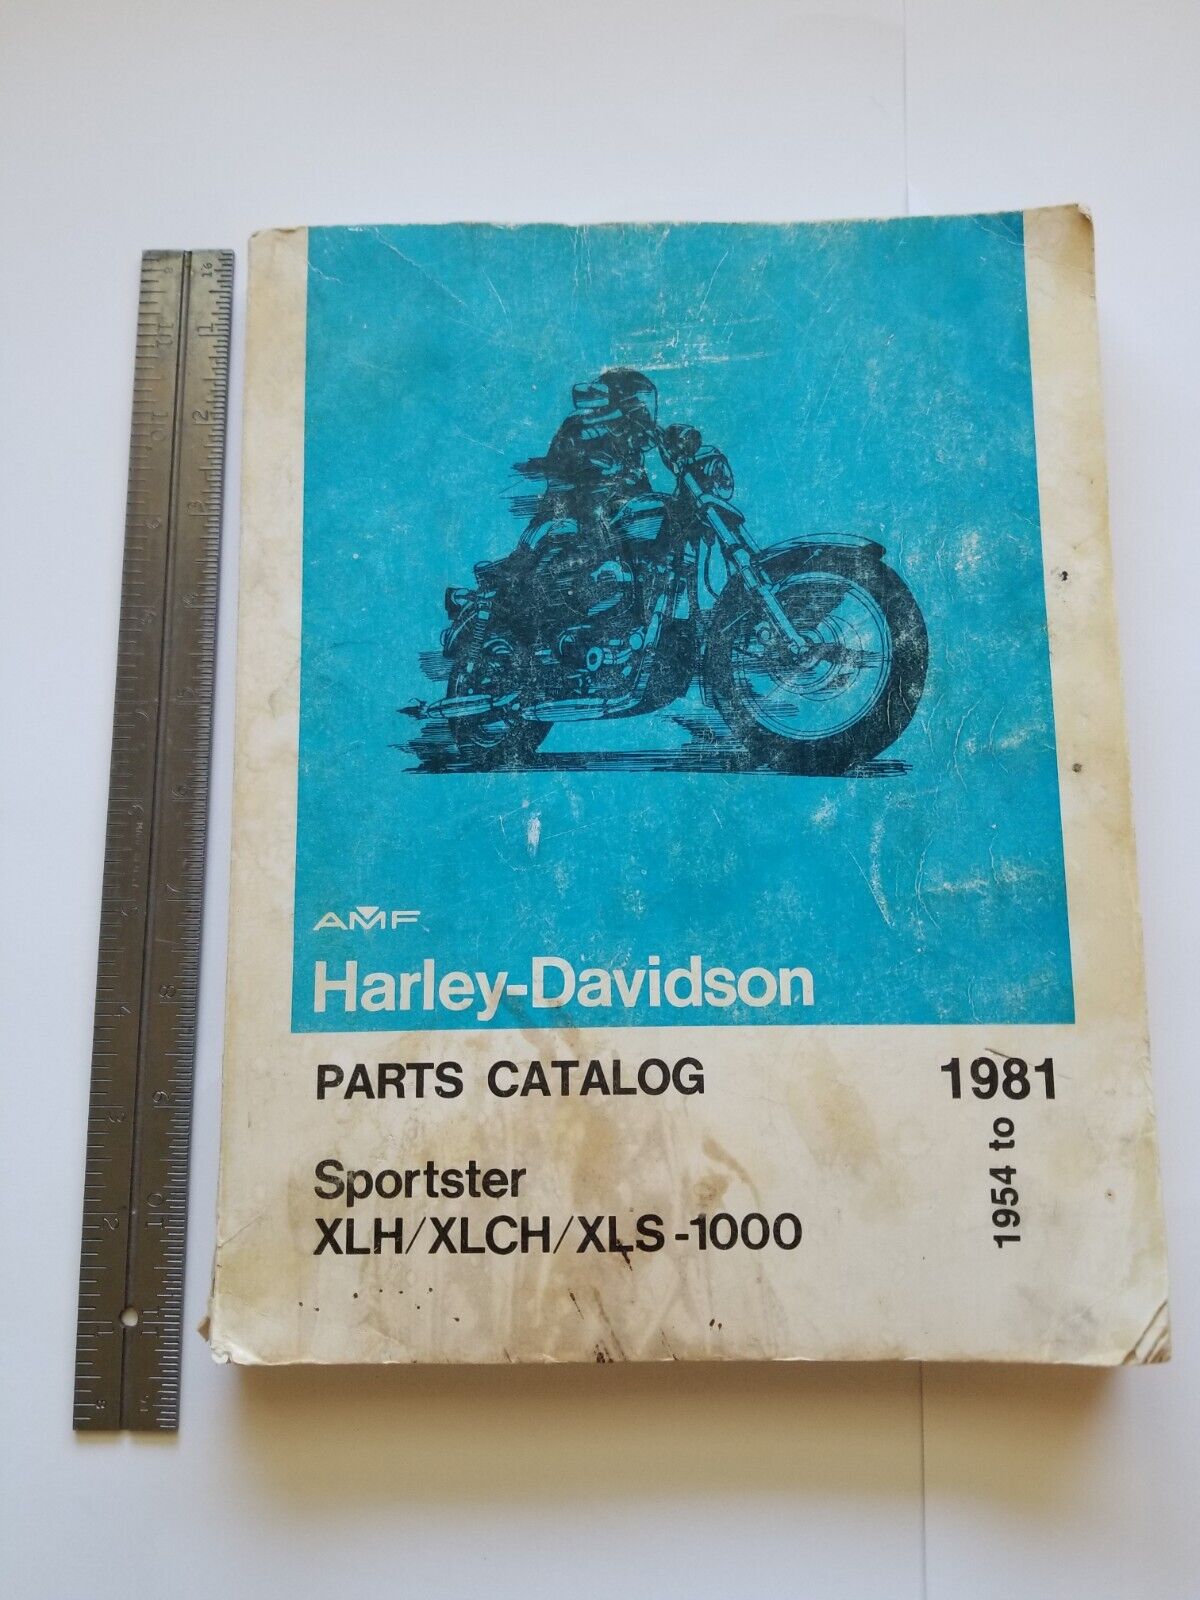 1954 To 1981 AMF Harley-Davidson Sportster Parts Catalog XLH/XLCH/XLS-1000 